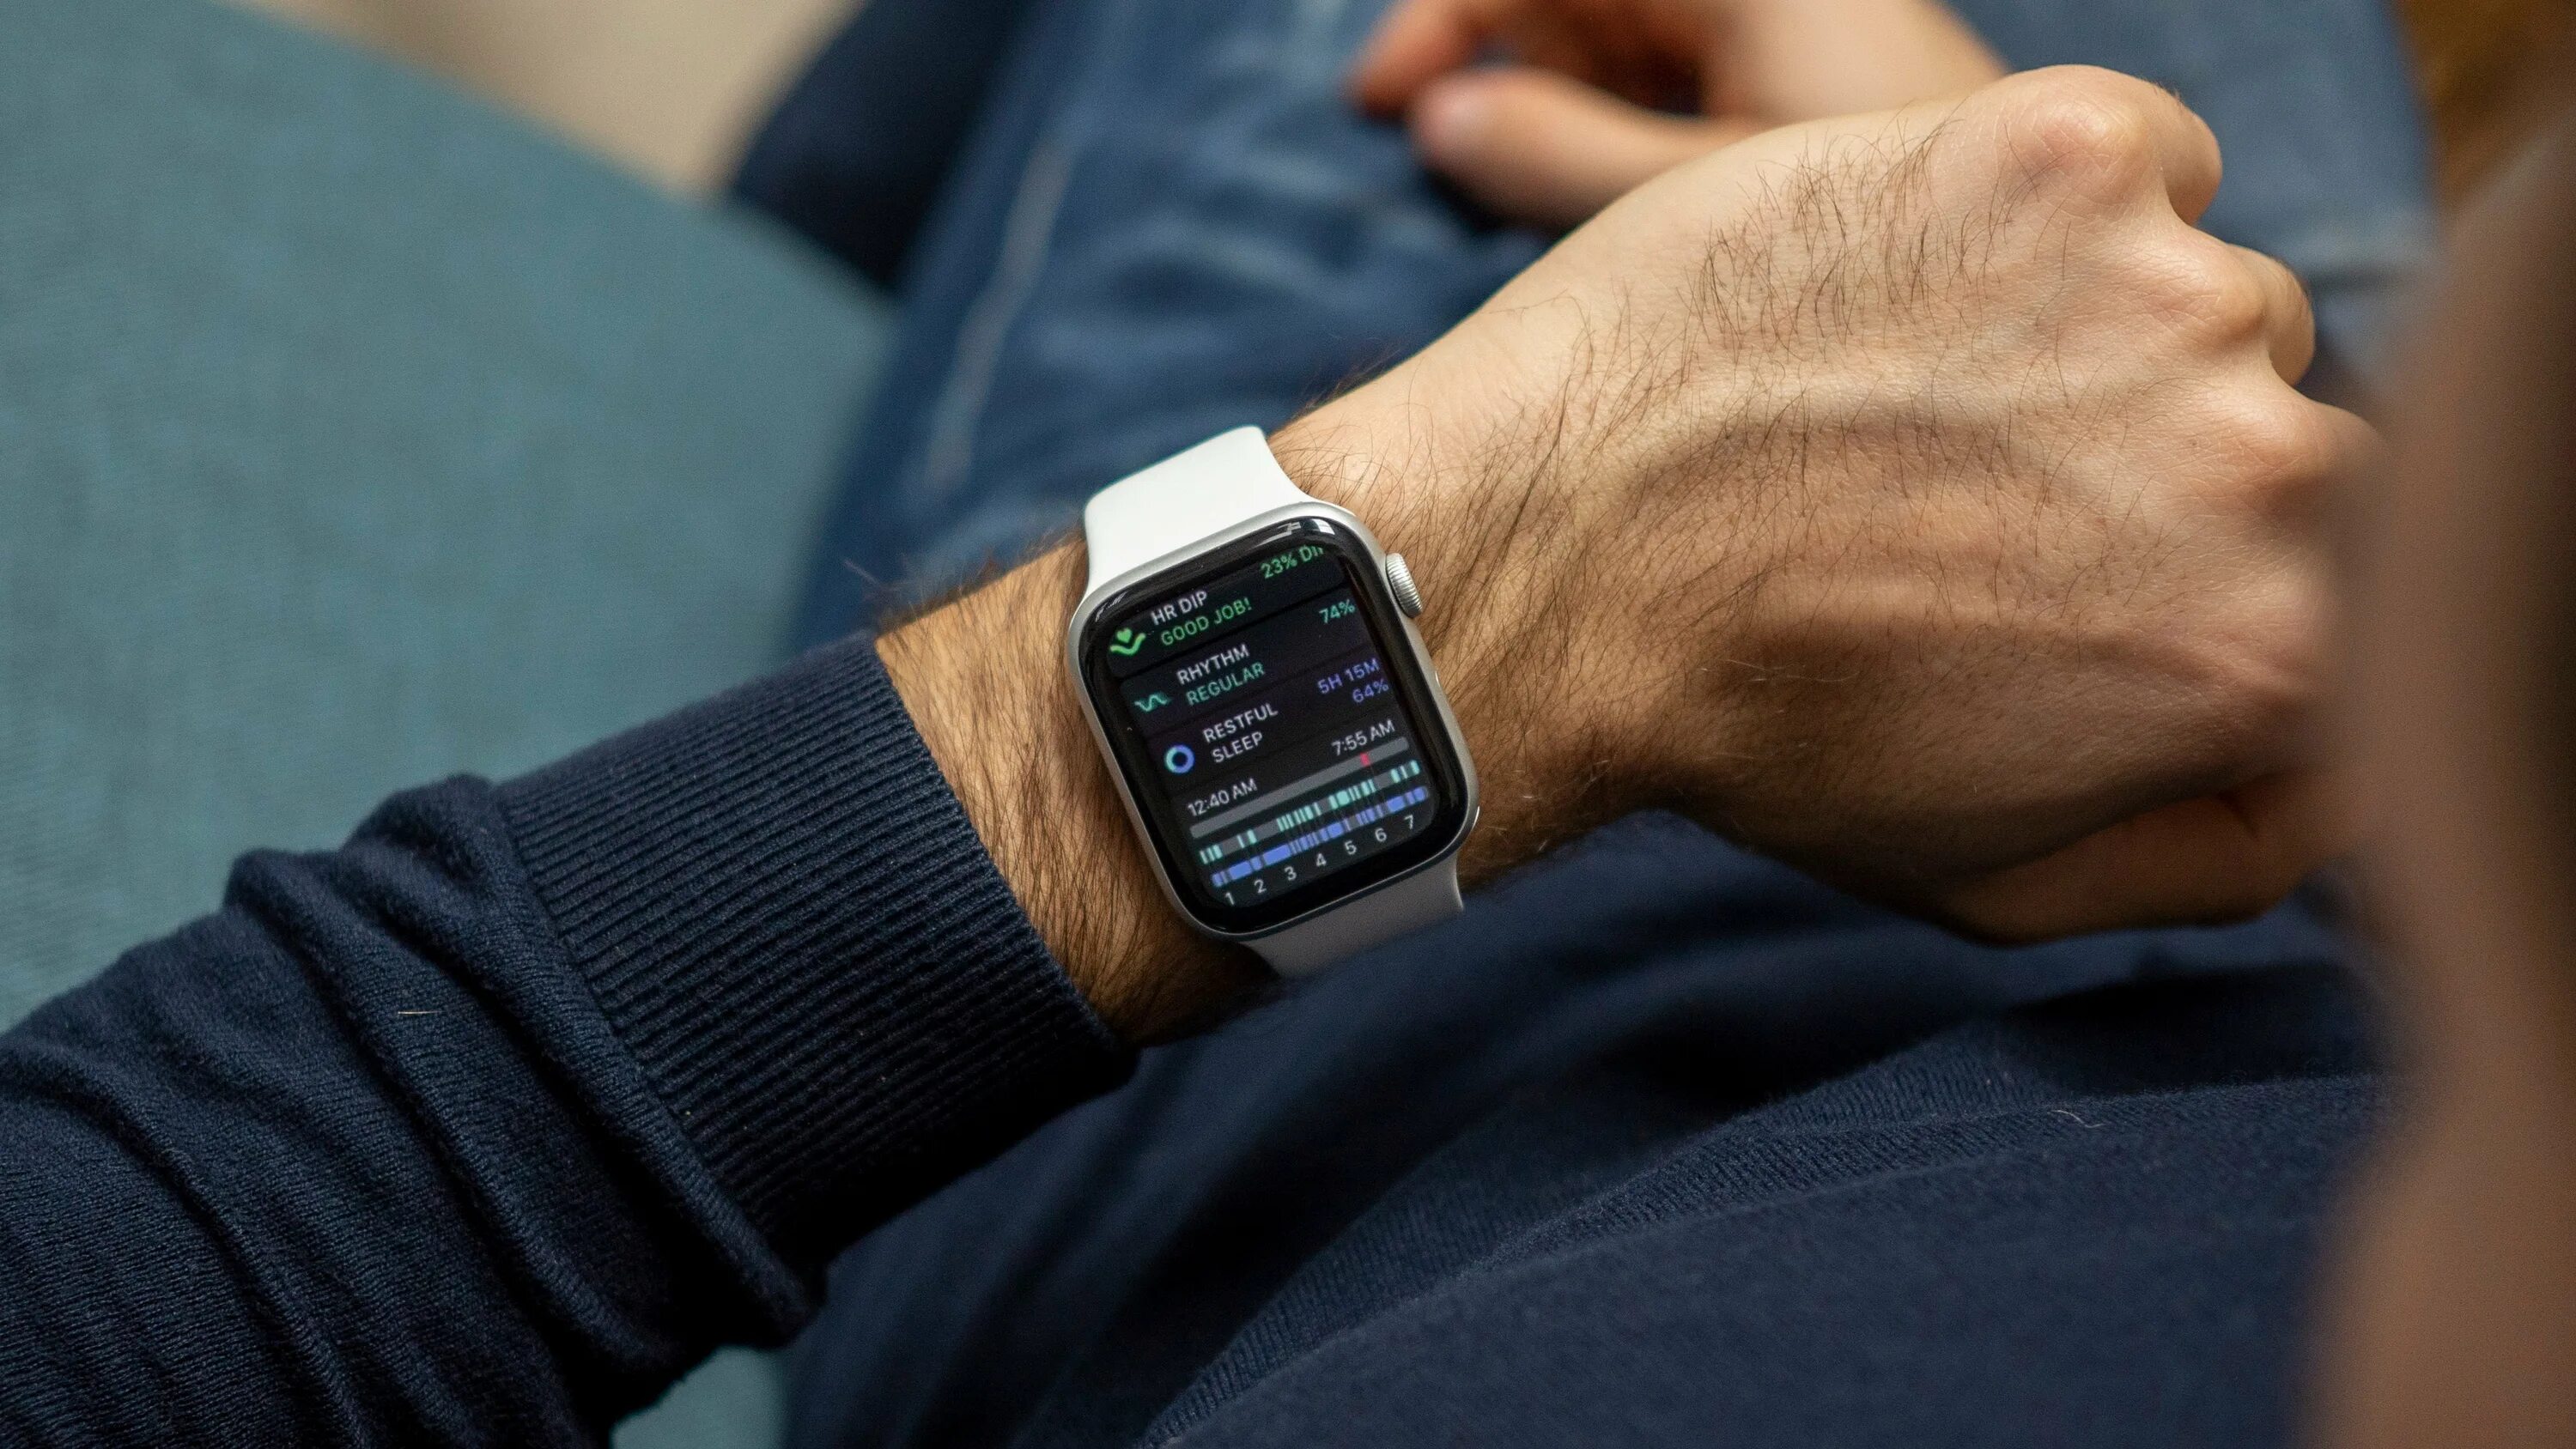 6 41 мм. Apple watch 6 44 mm. Смарт часы эпл вотч 6. Apple watch se 40mm. Apple watch Series 6 44mm.